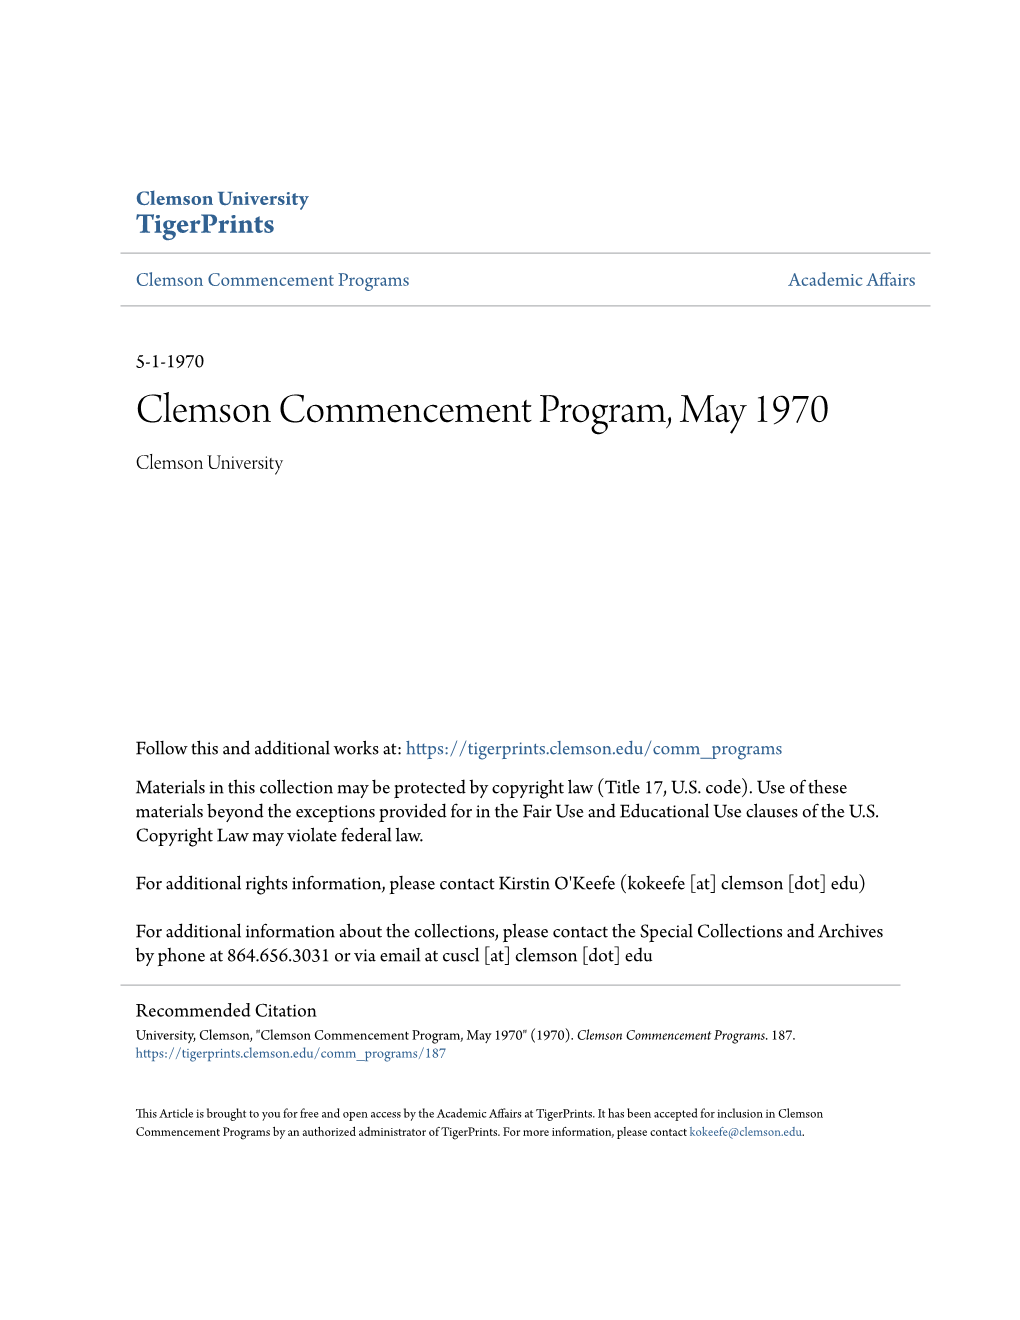 Clemson Commencement Program, May 1970 Clemson University